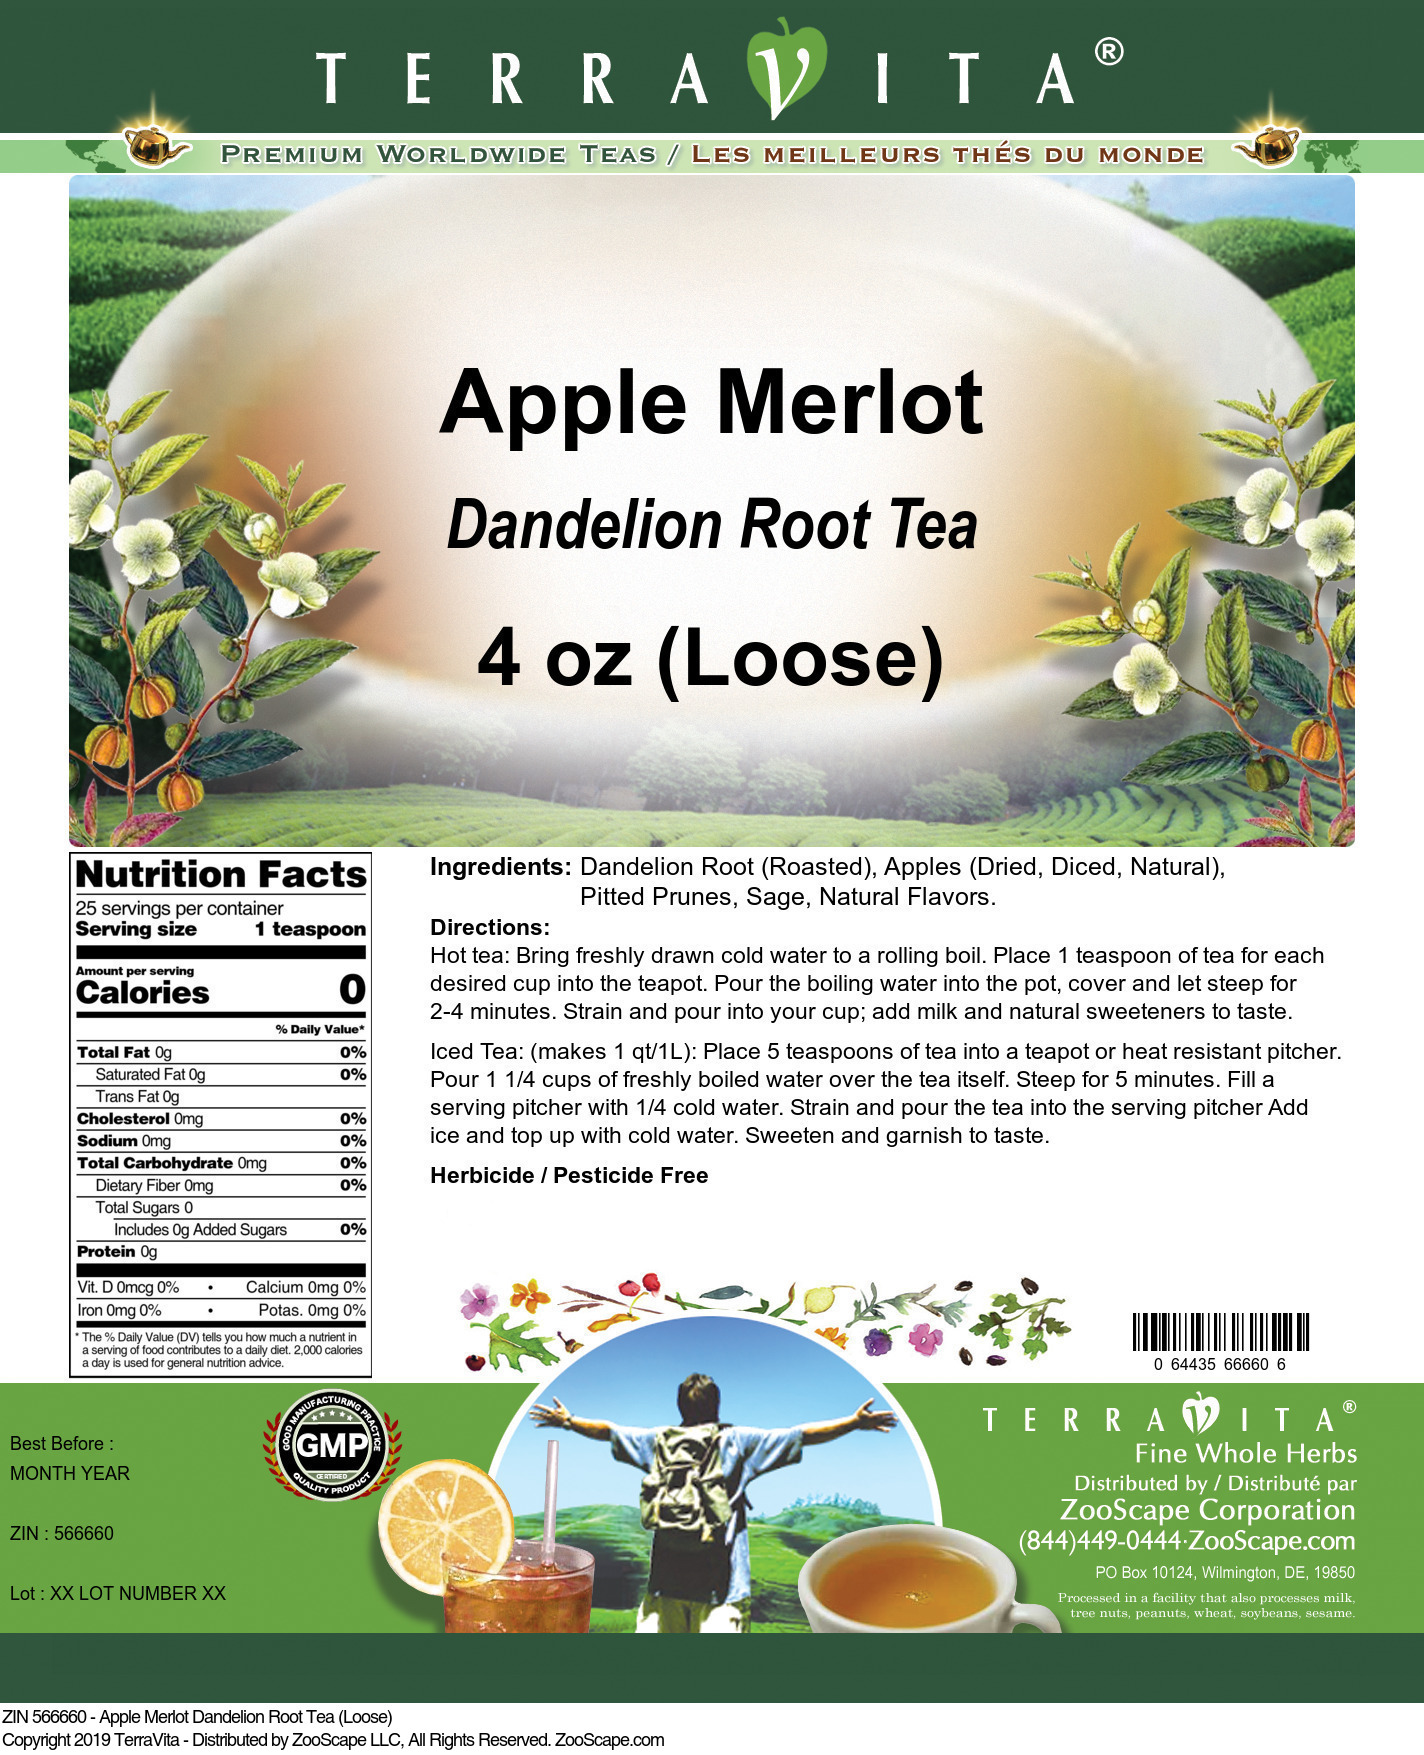 Apple Merlot Dandelion Root Tea (Loose) - Label